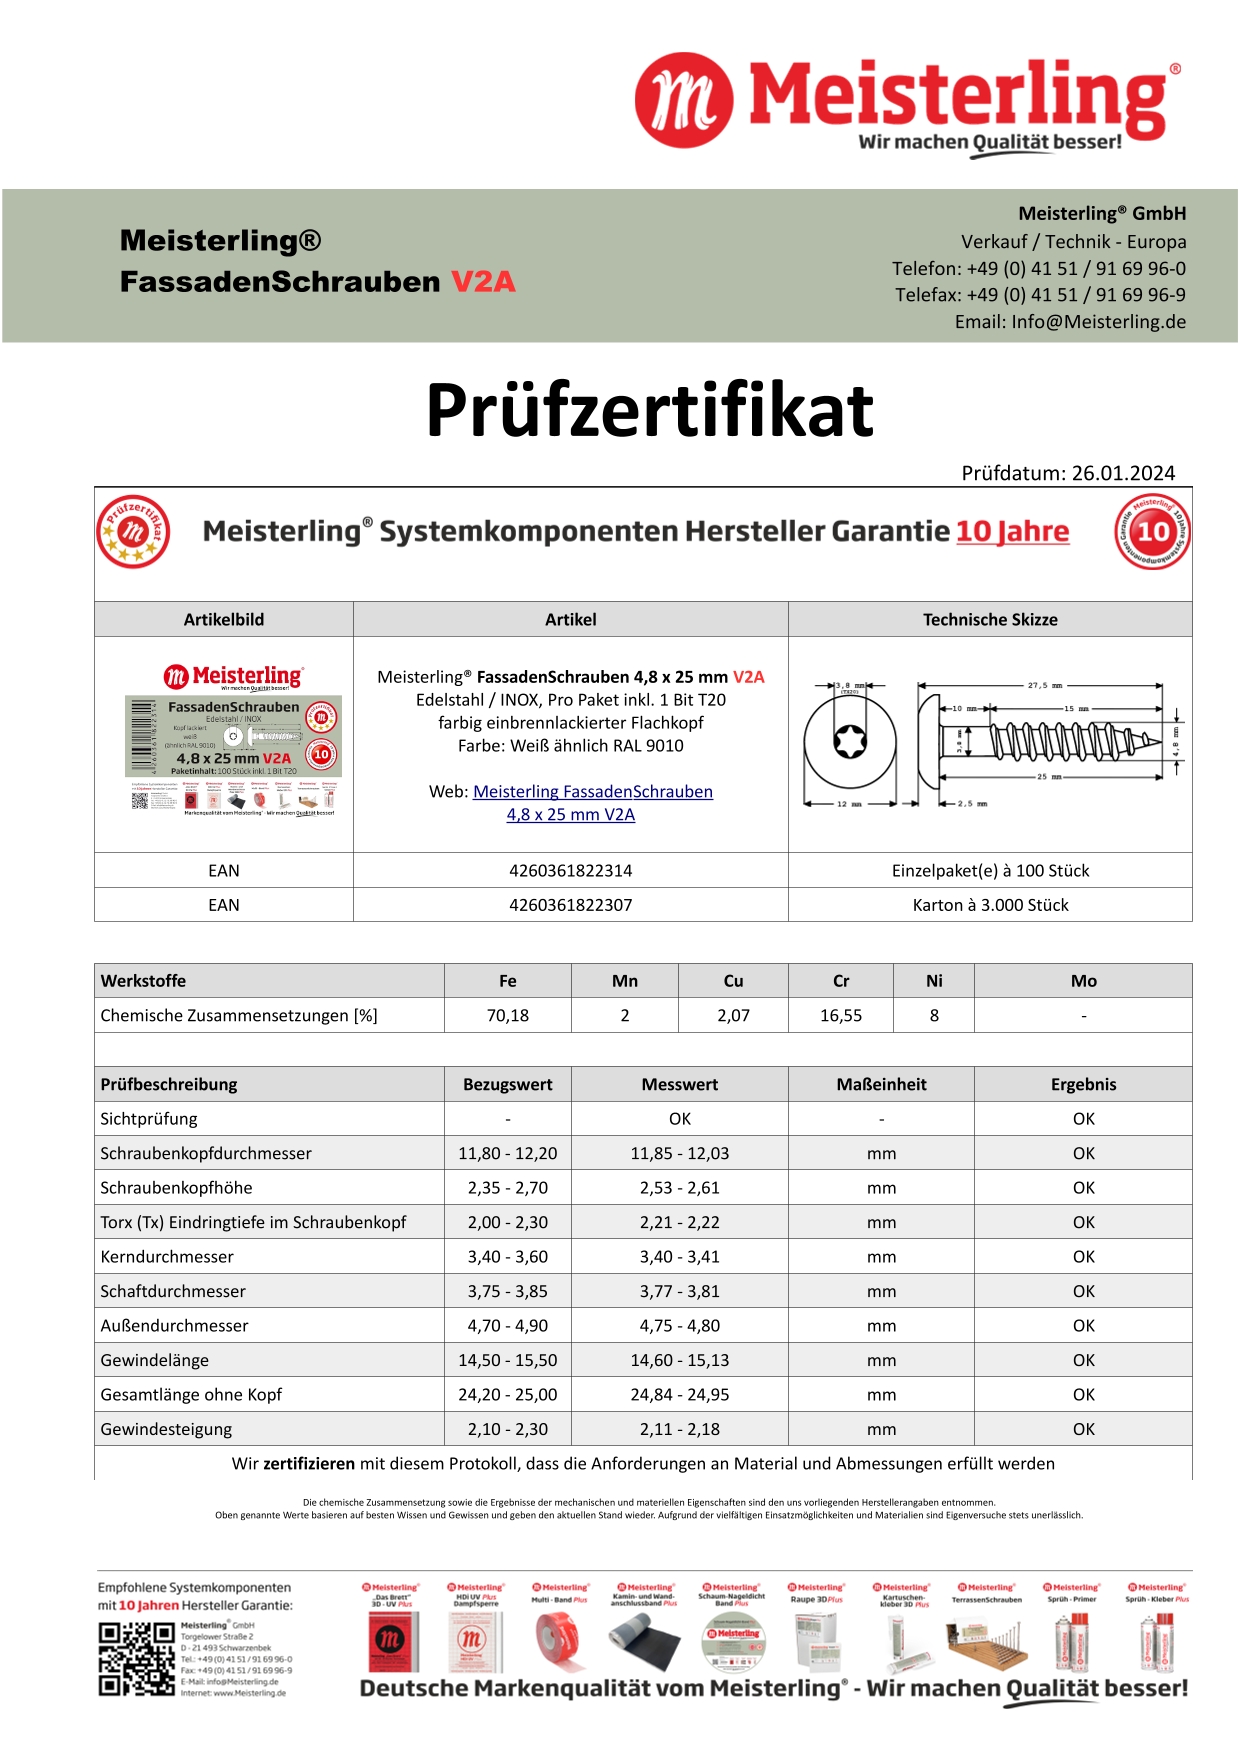 Prüfzertifikat Meisterling® FassadenSchrauben 4,8 x 25 mm V2a weiß